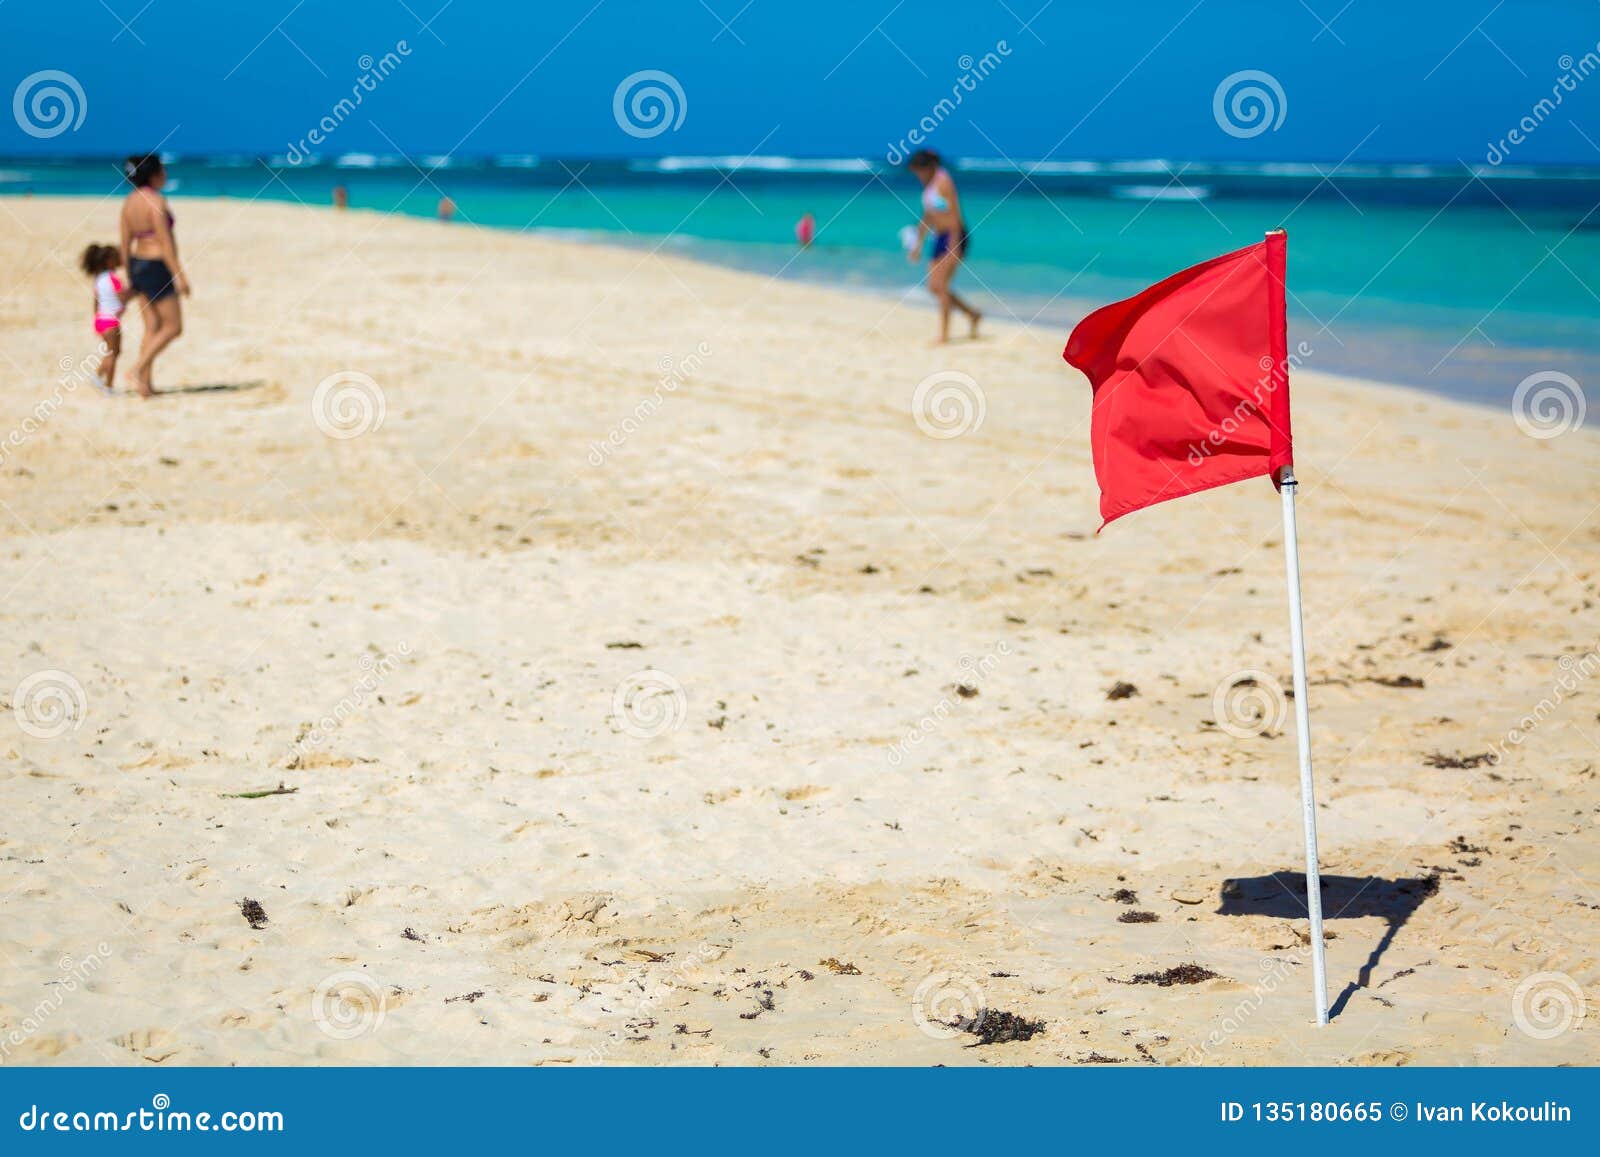 Beach warning red flags wind -Fotos und -Bildmaterial in hoher